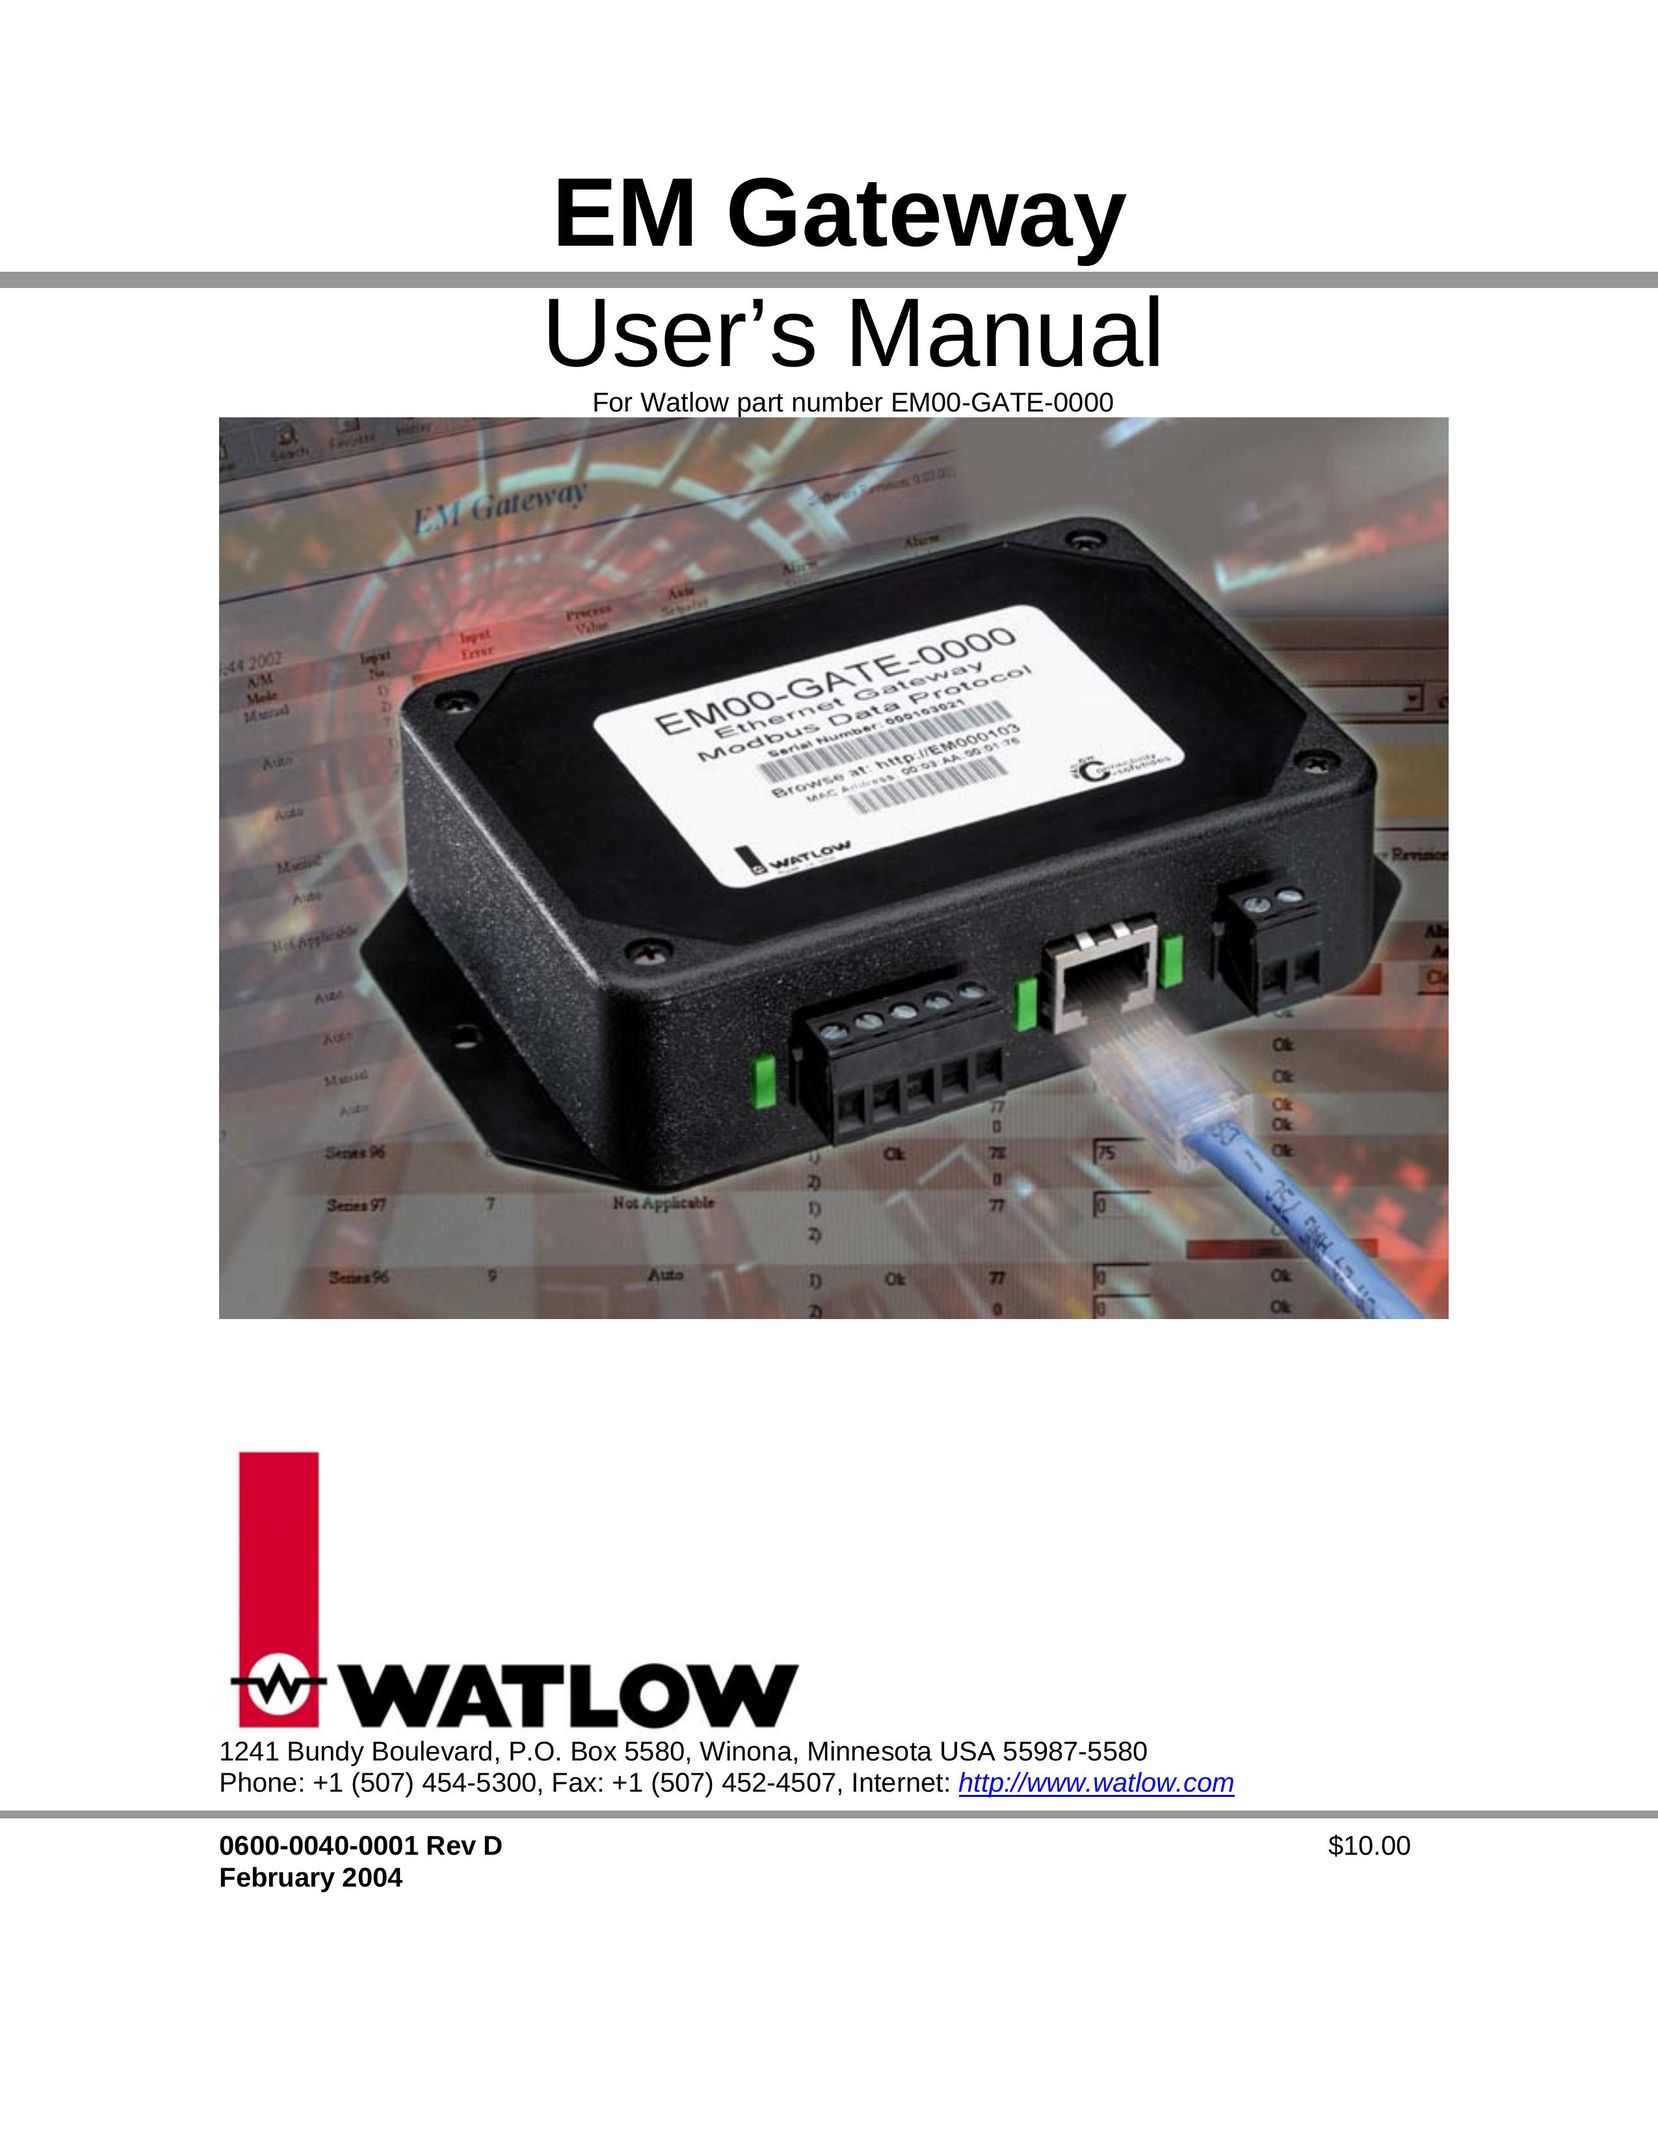 Watlow Electric EM00-GATE-0000 Network Router User Manual